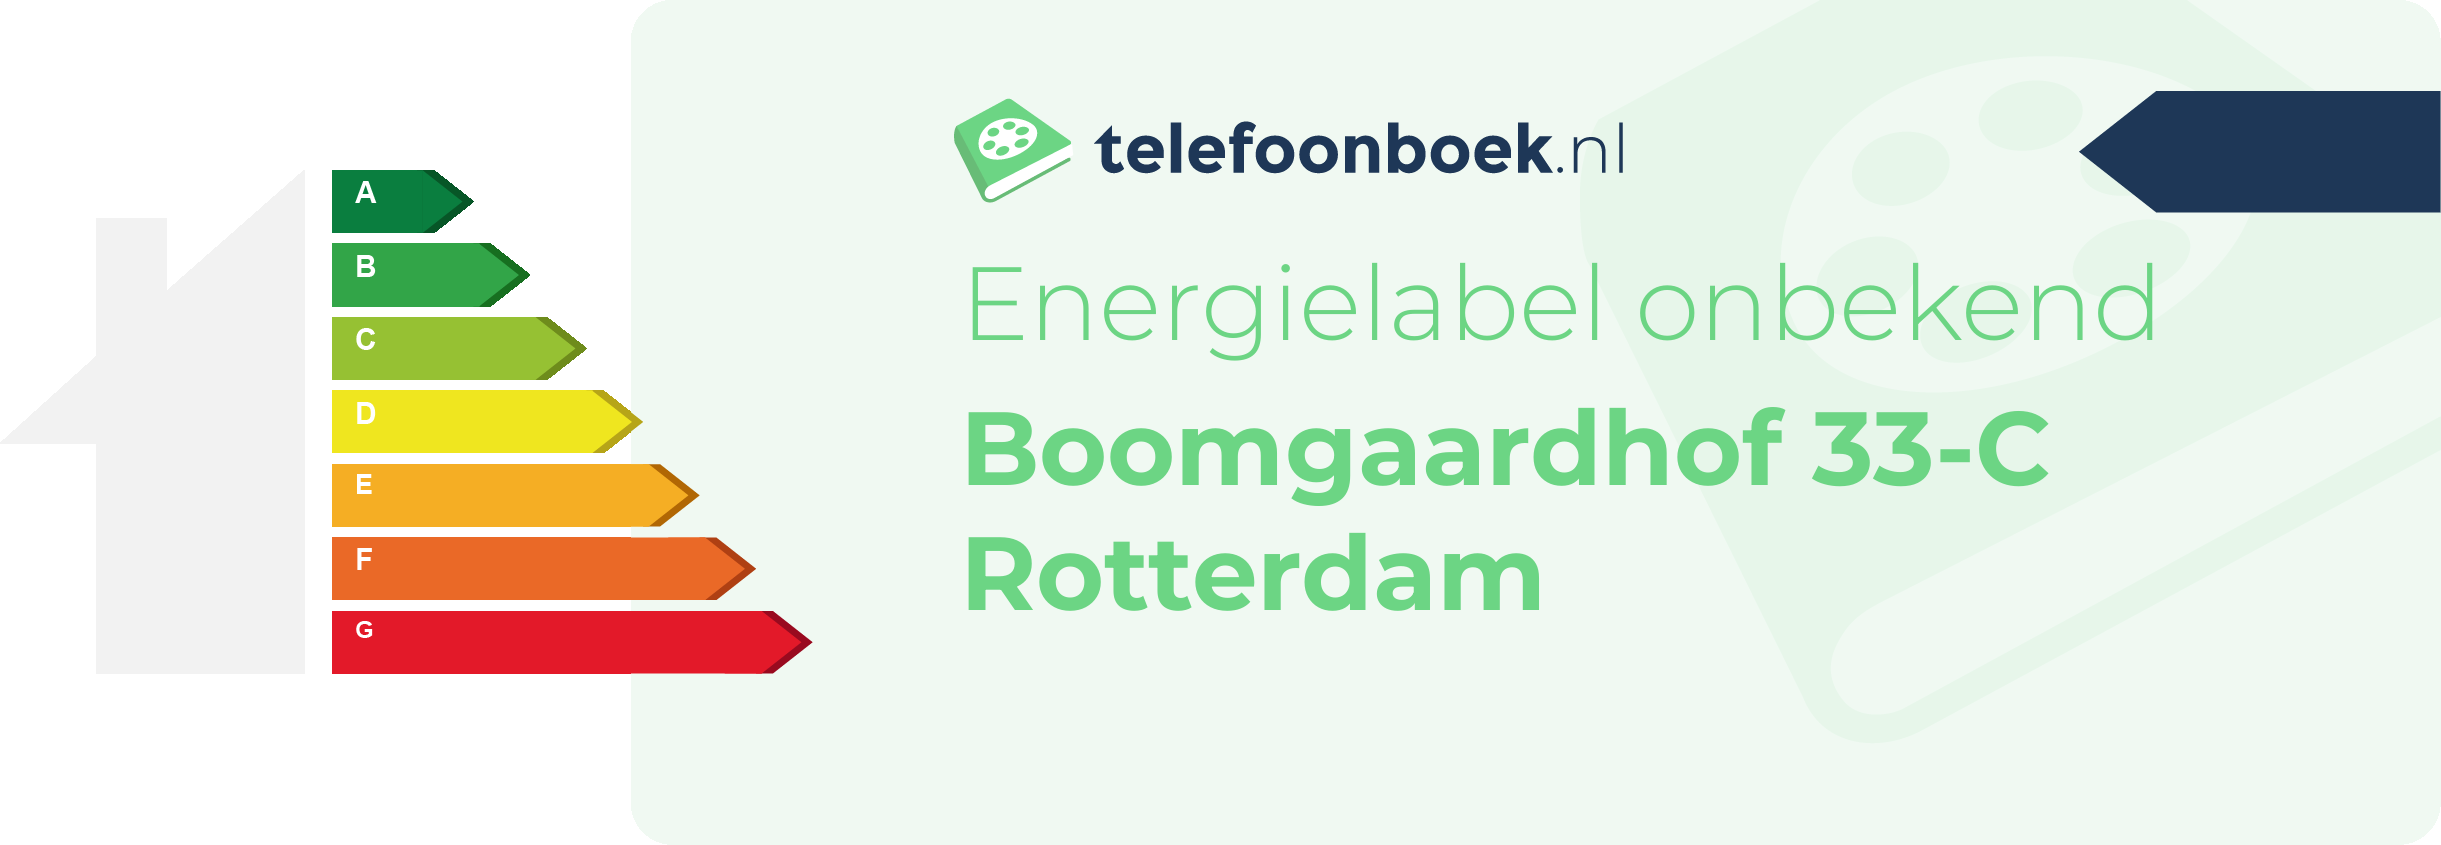 Energielabel Boomgaardhof 33-C Rotterdam